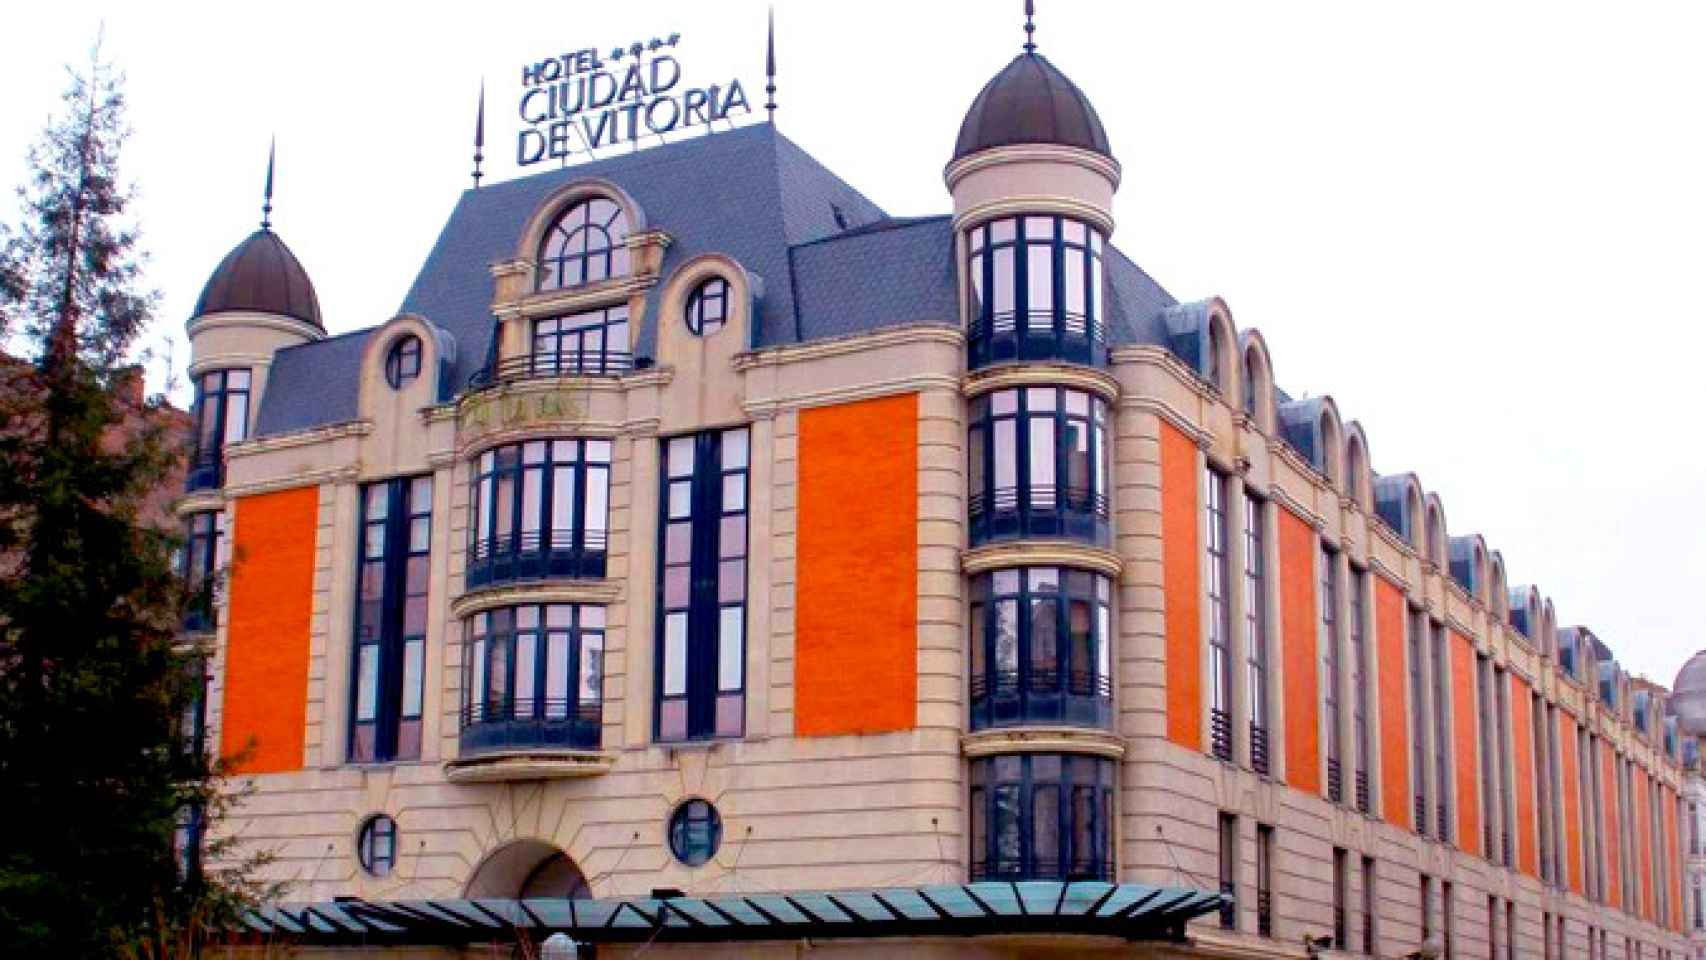 Hotel Ciudad de Vitoria (Hoteles Silken) del Grupo Urvasco en Vitoria / WP